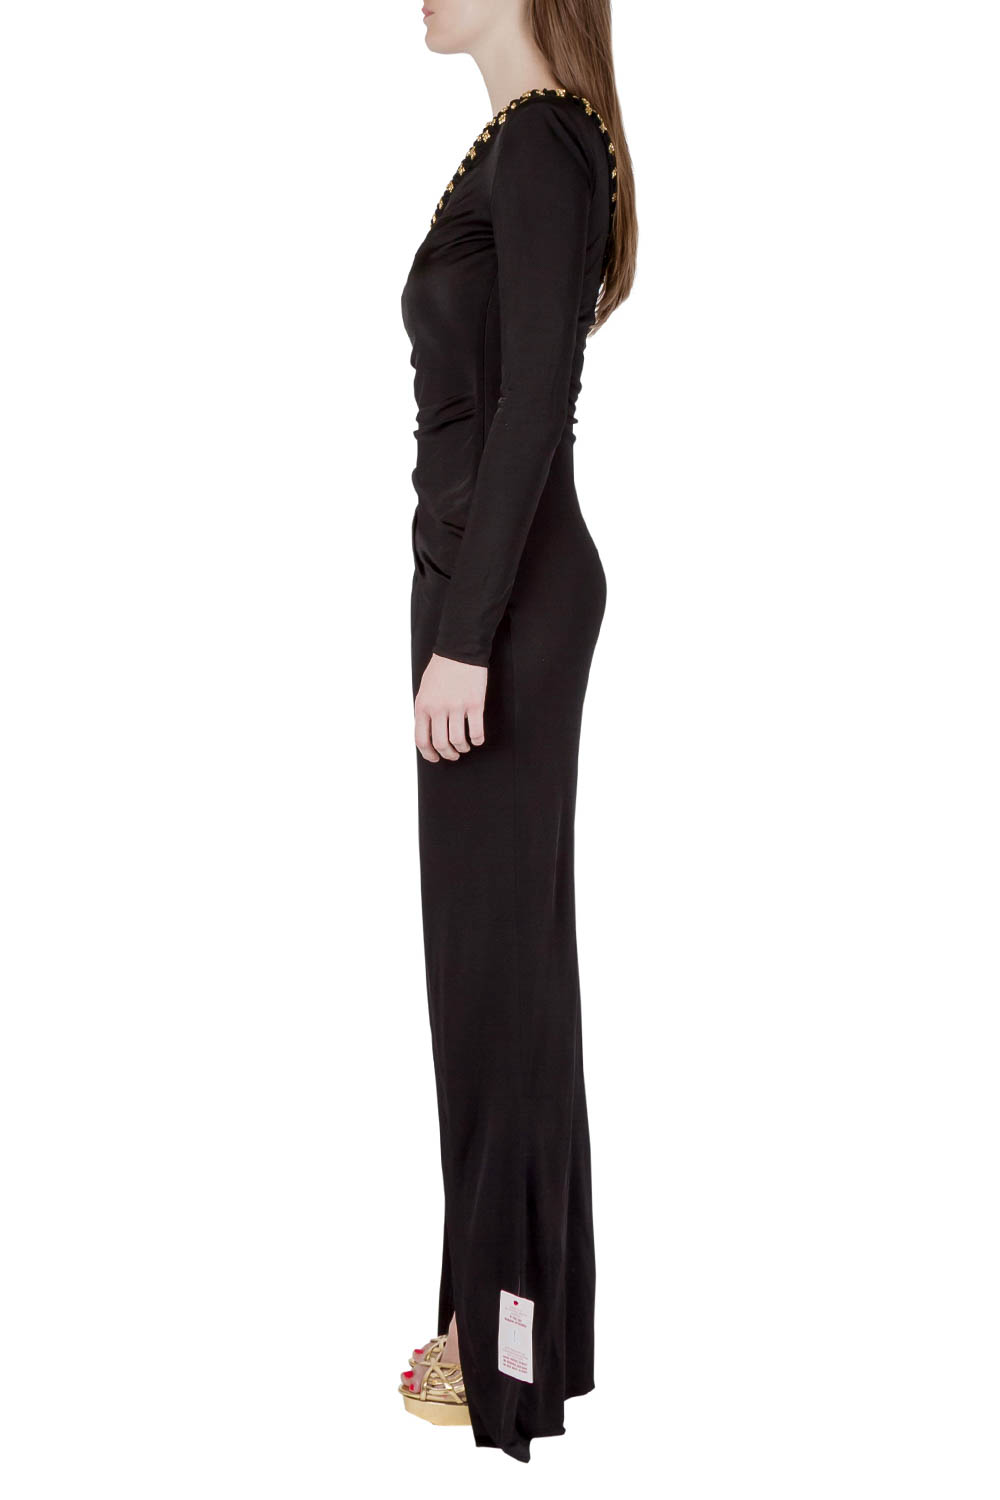 

Balmain Black Stretch Knit Crystal Embellished Draped One Shoulder Evening Gown